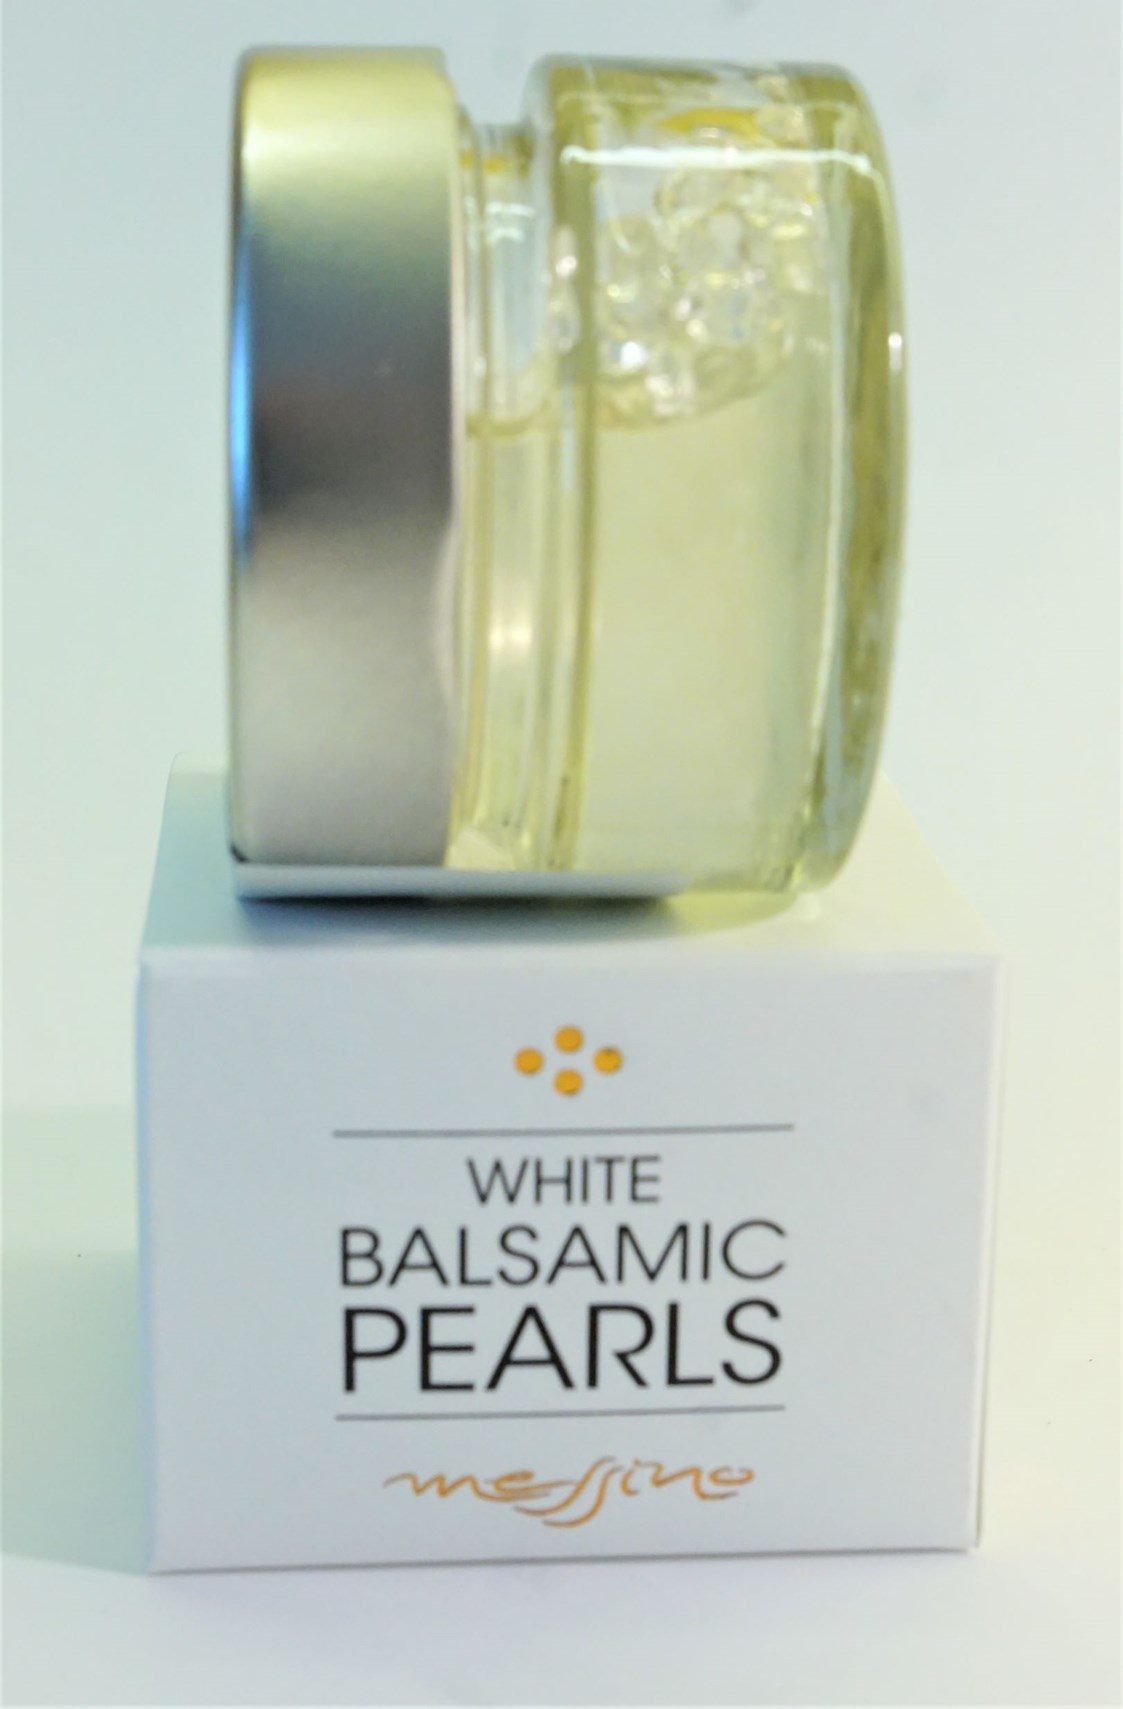 Unternehmen: white Balsamico pearls - EliTsa e.U. 